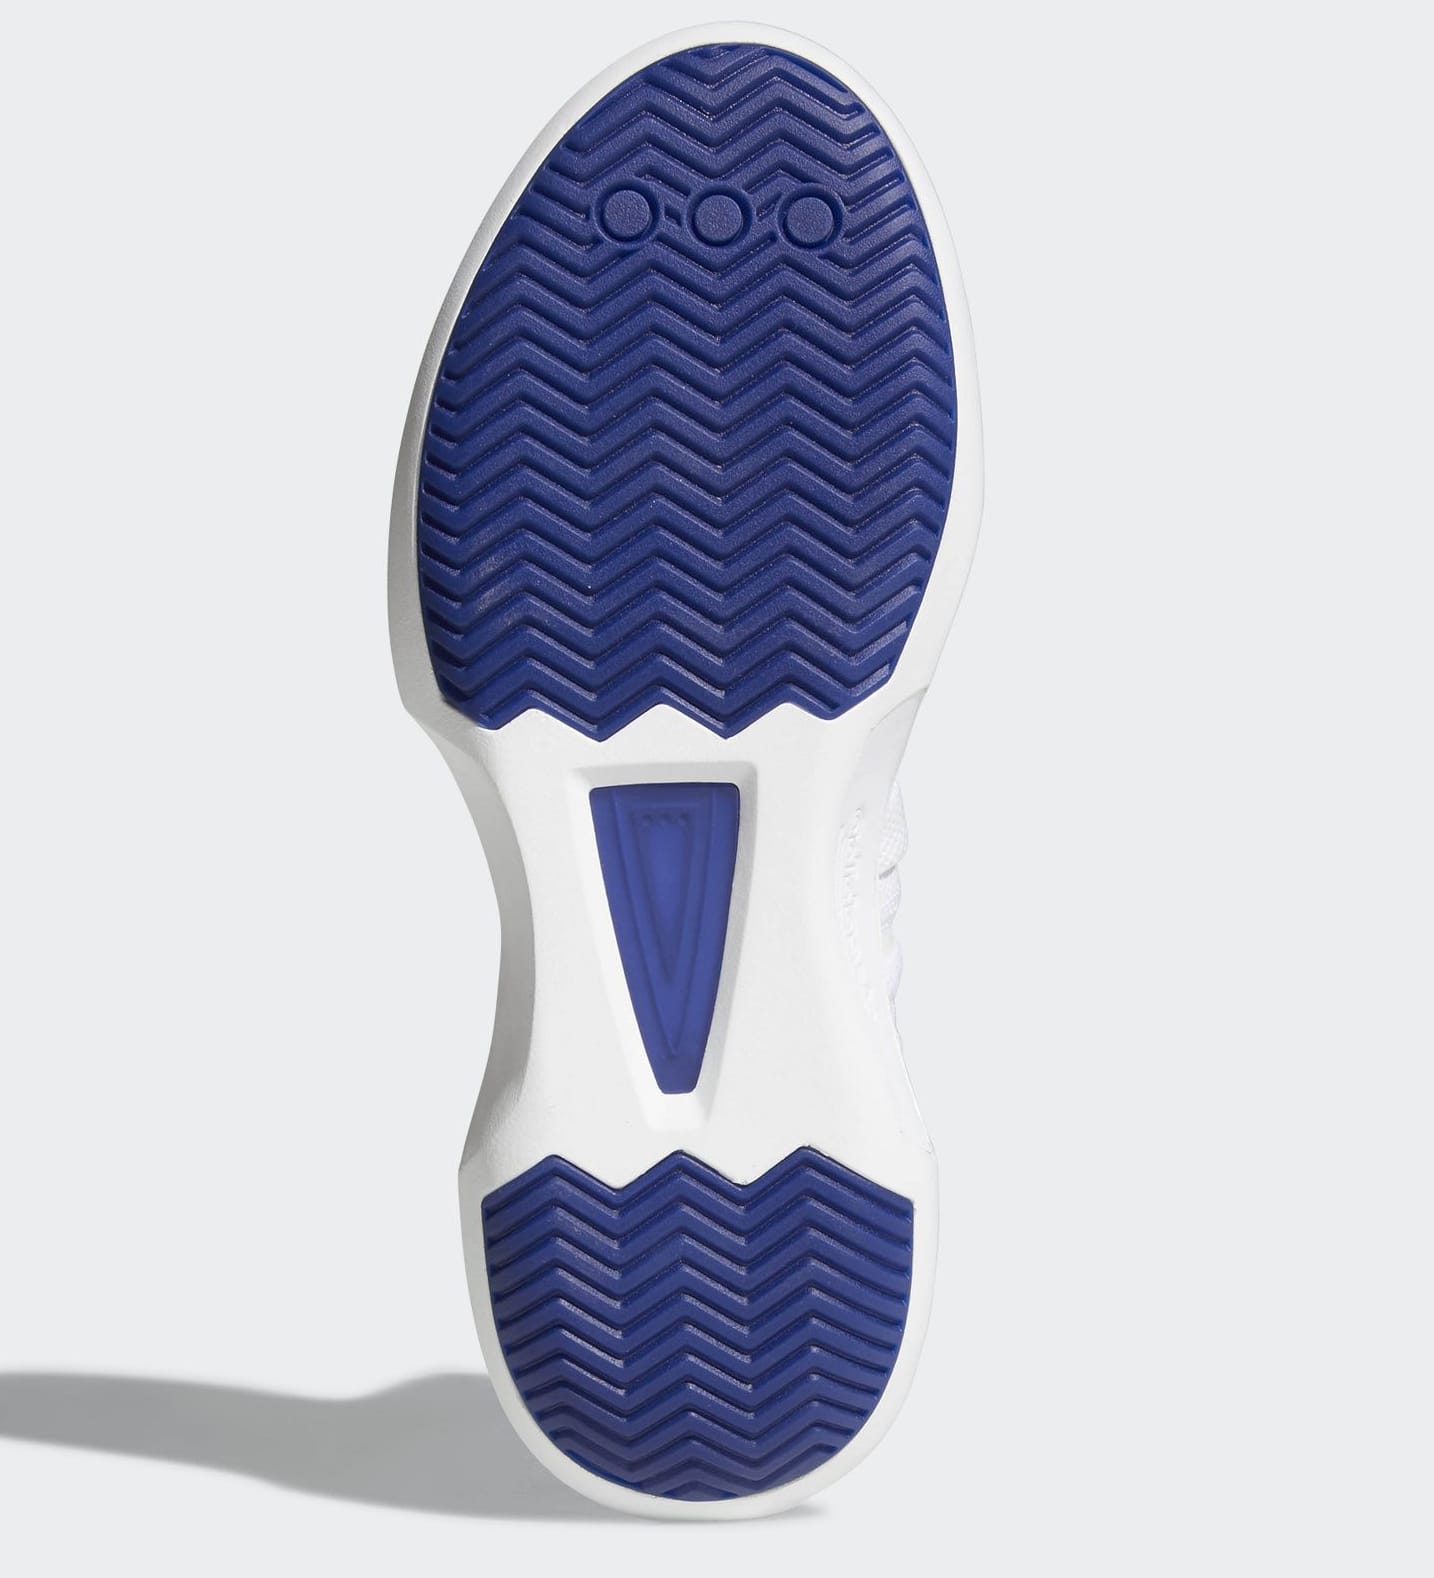 adidas-crazy-1-adv-sock-primeknit